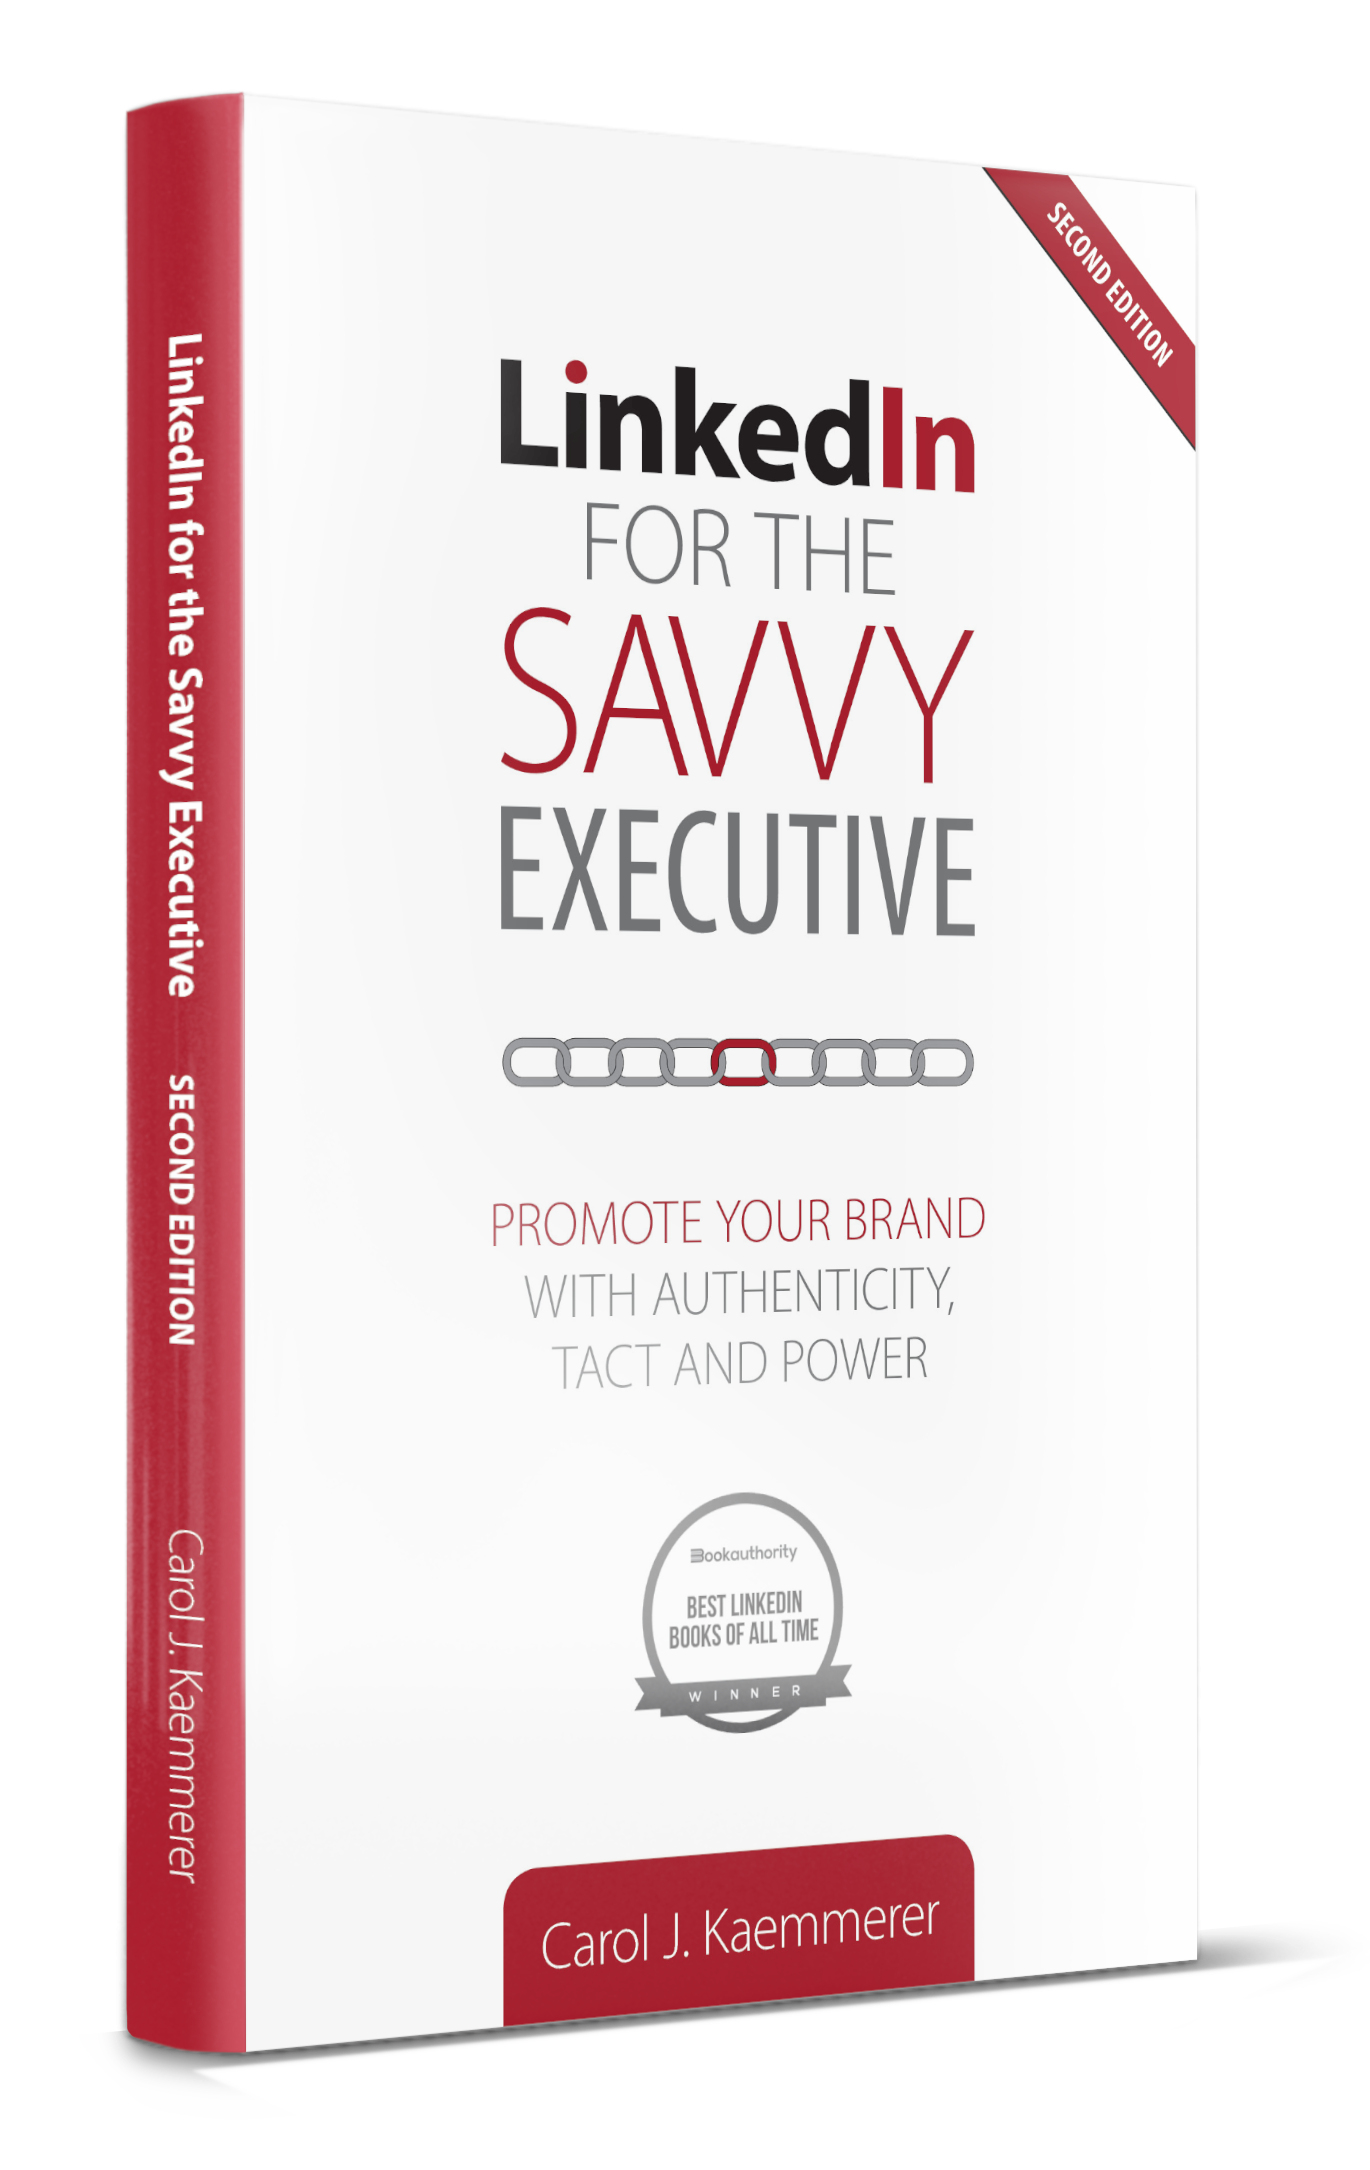 Carol's latest book, LinkedIn for the Savvy Executive, Second Edition